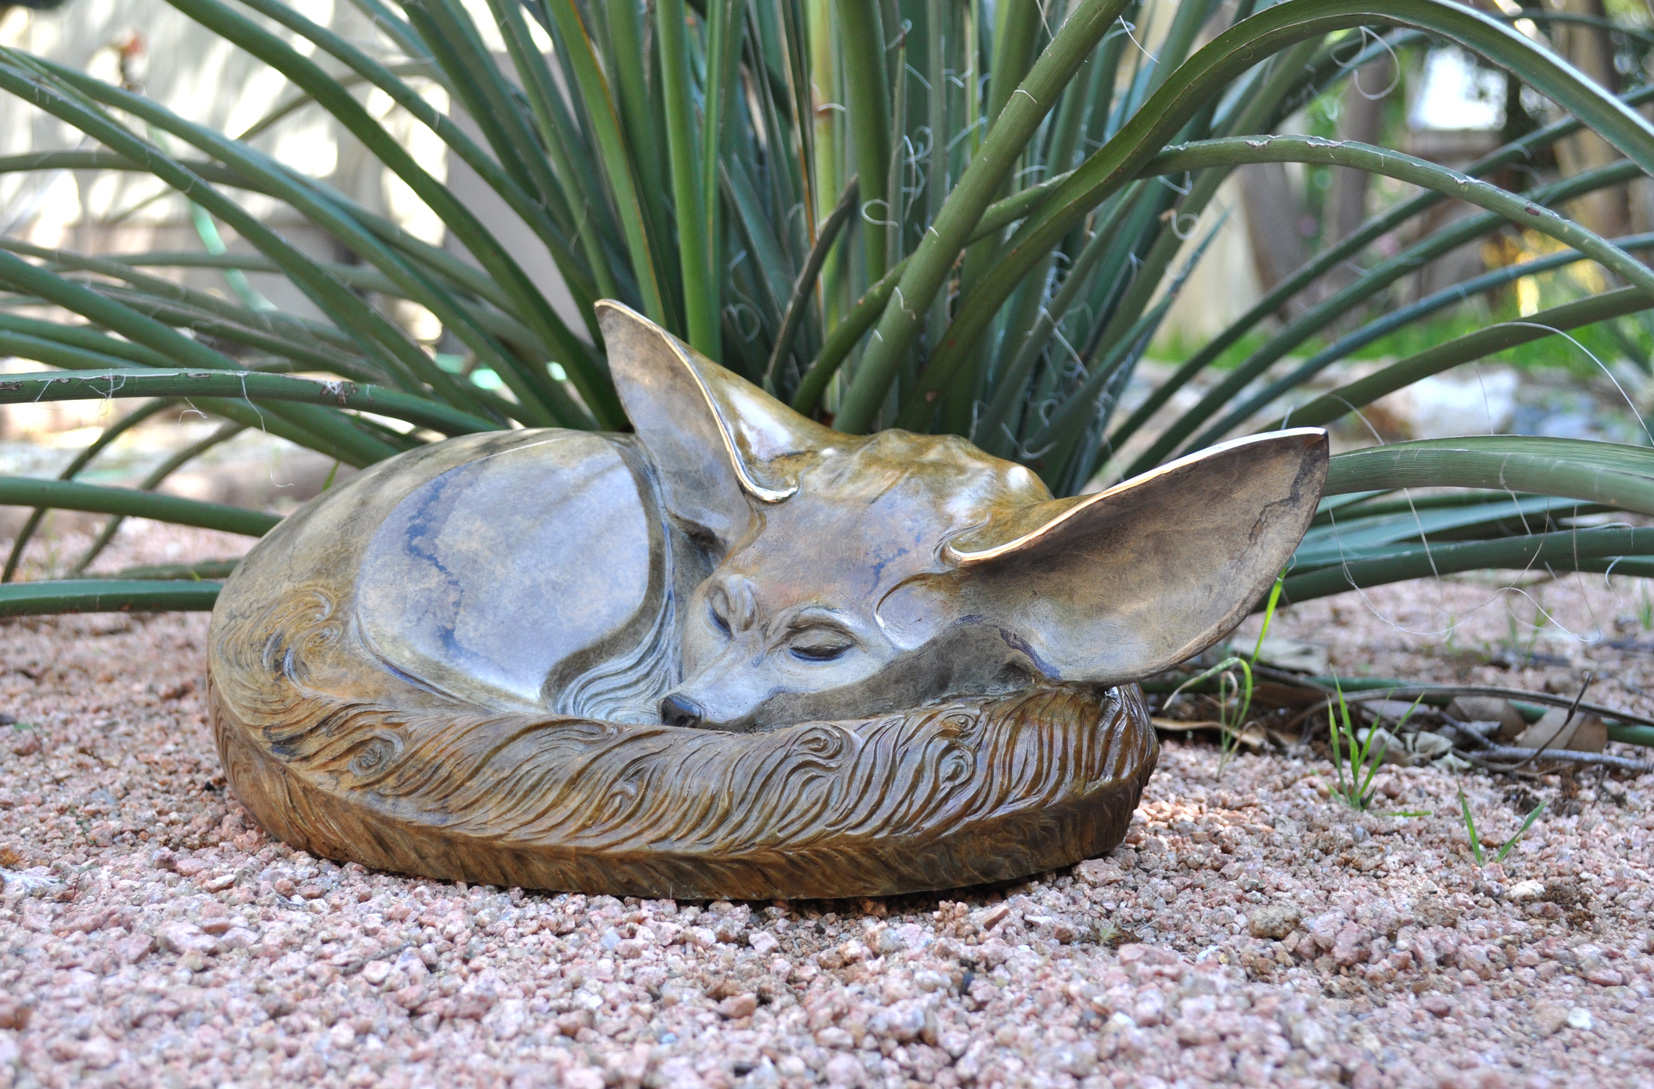   Bronze Fennec Fox Sculpture by Artist John Maisano  